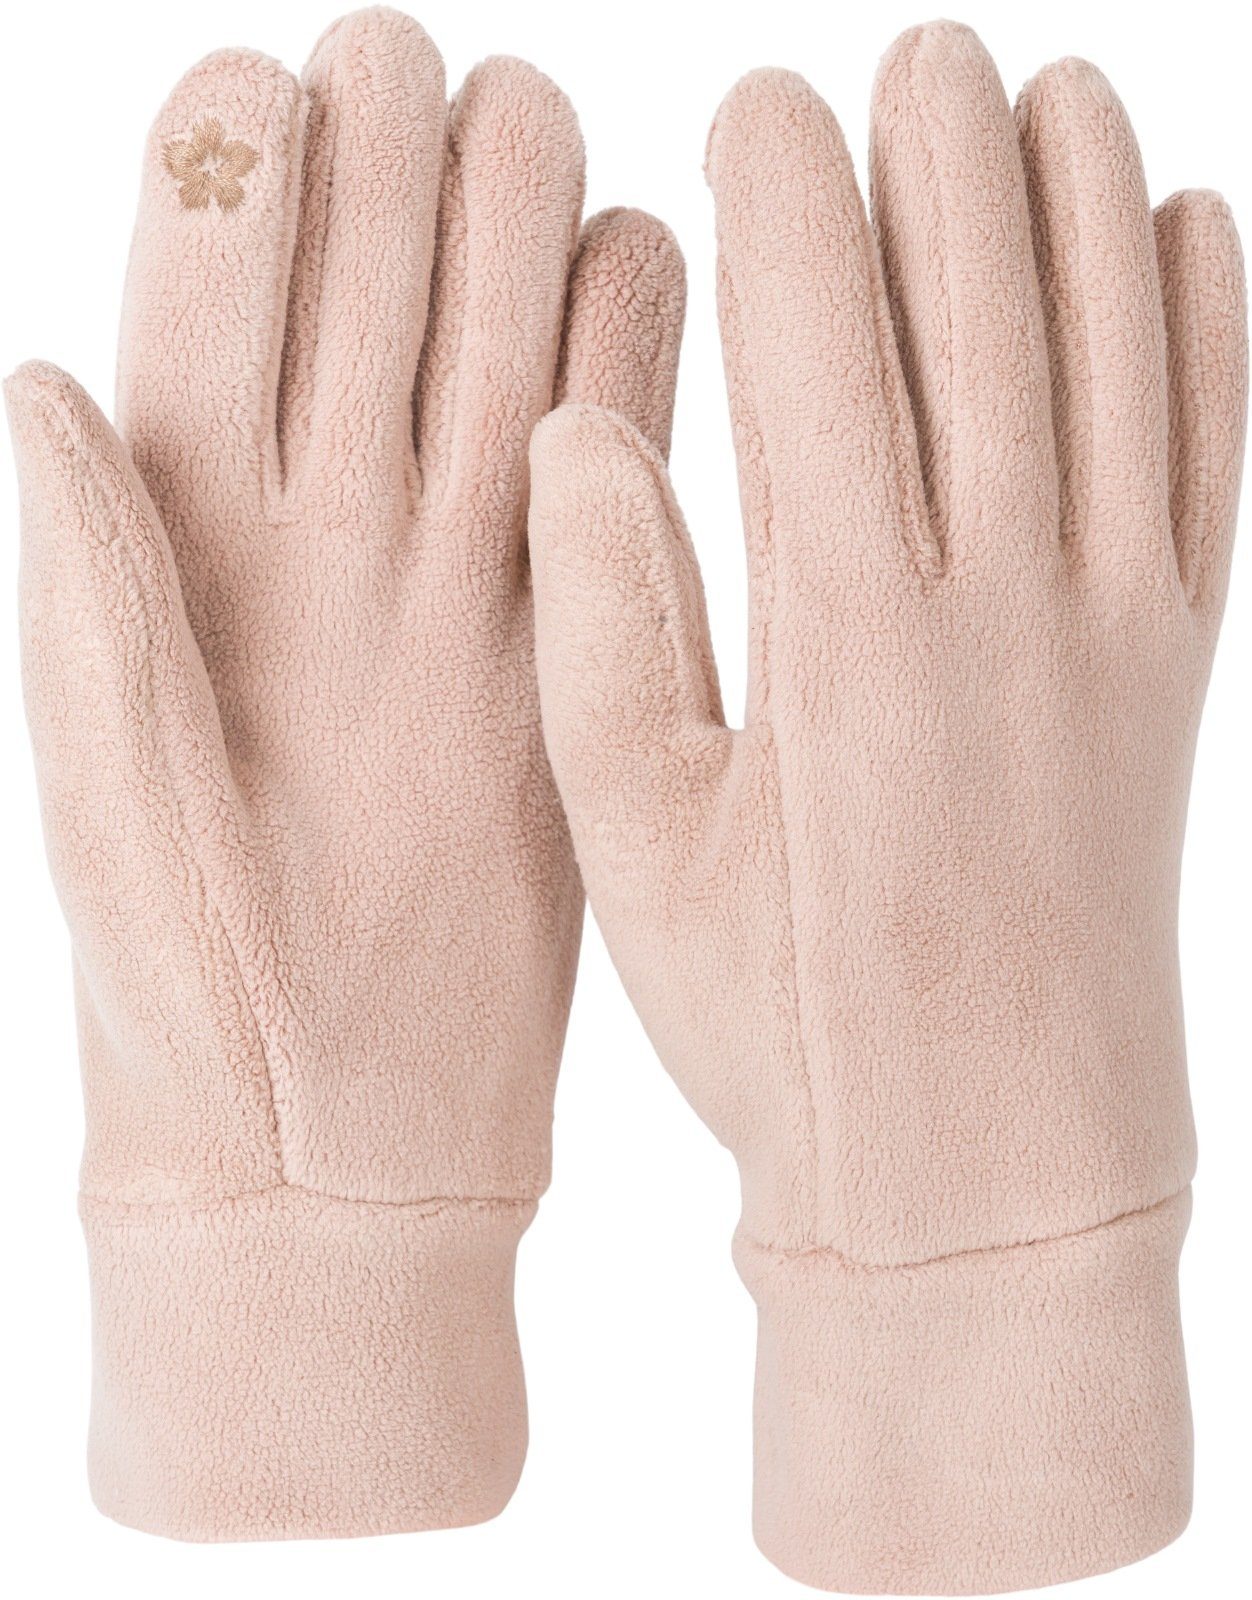 styleBREAKER Fleecehandschuhe Einfarbige Touchscreen Fleece Handschuhe Hellbraun